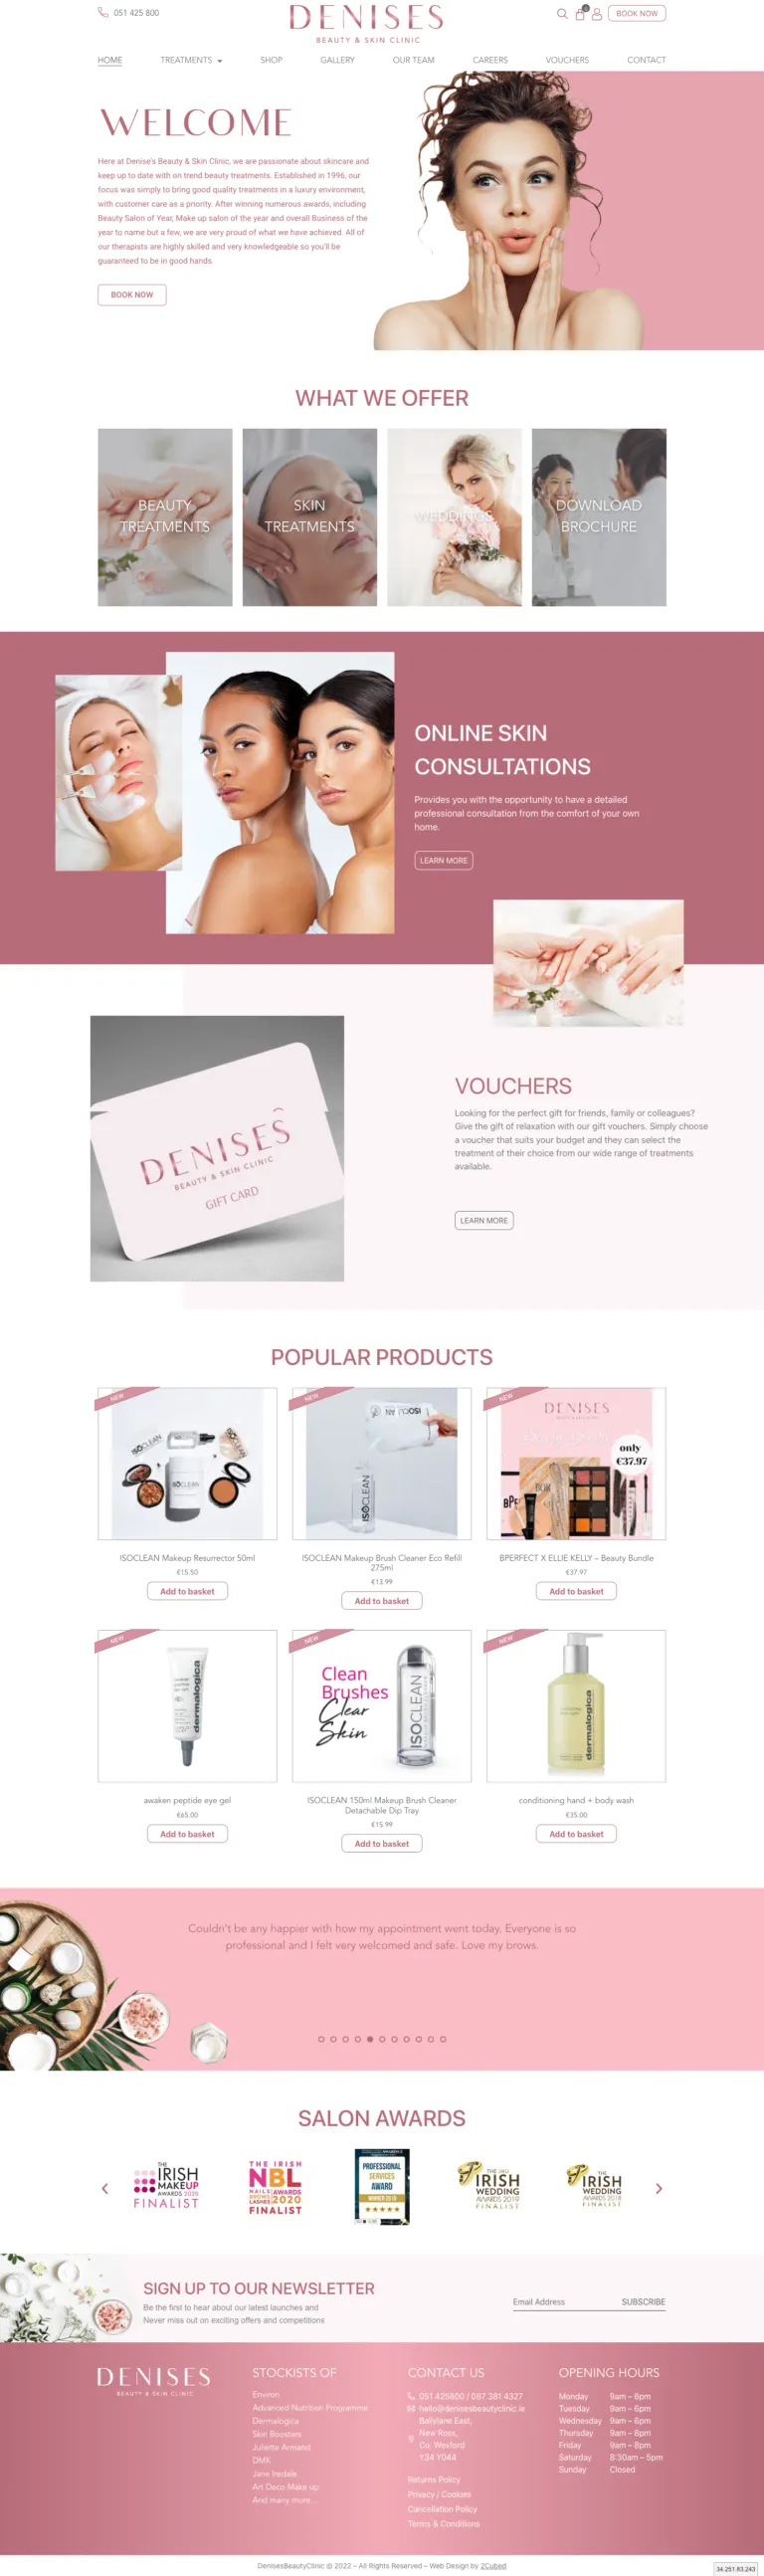 Denise’s Beauty Clinic